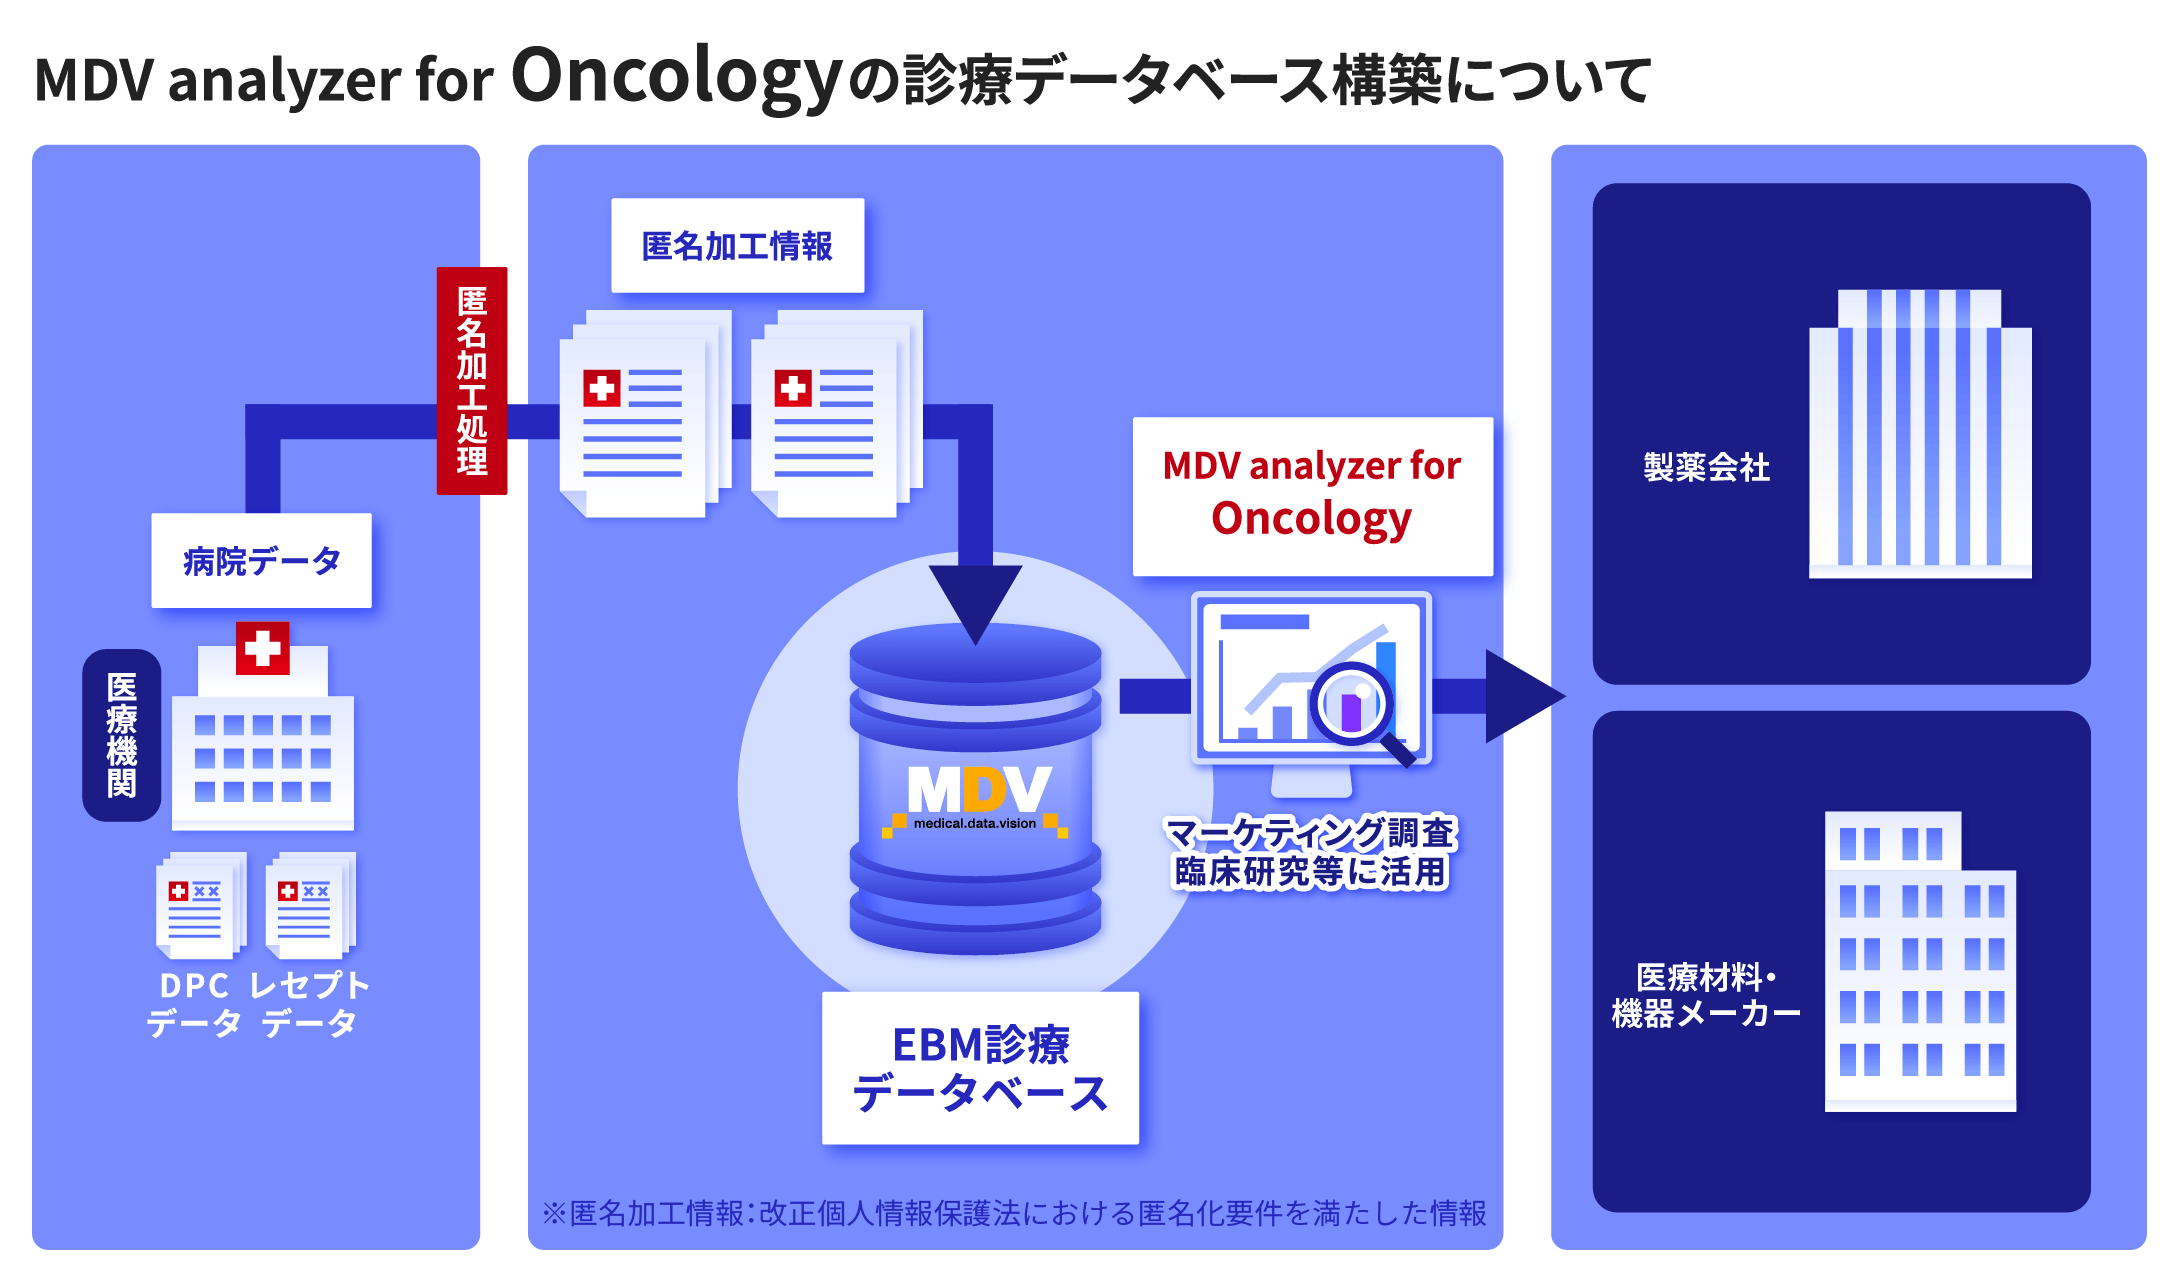 EBM診療データベースイラストMDV analyzer for Oncology